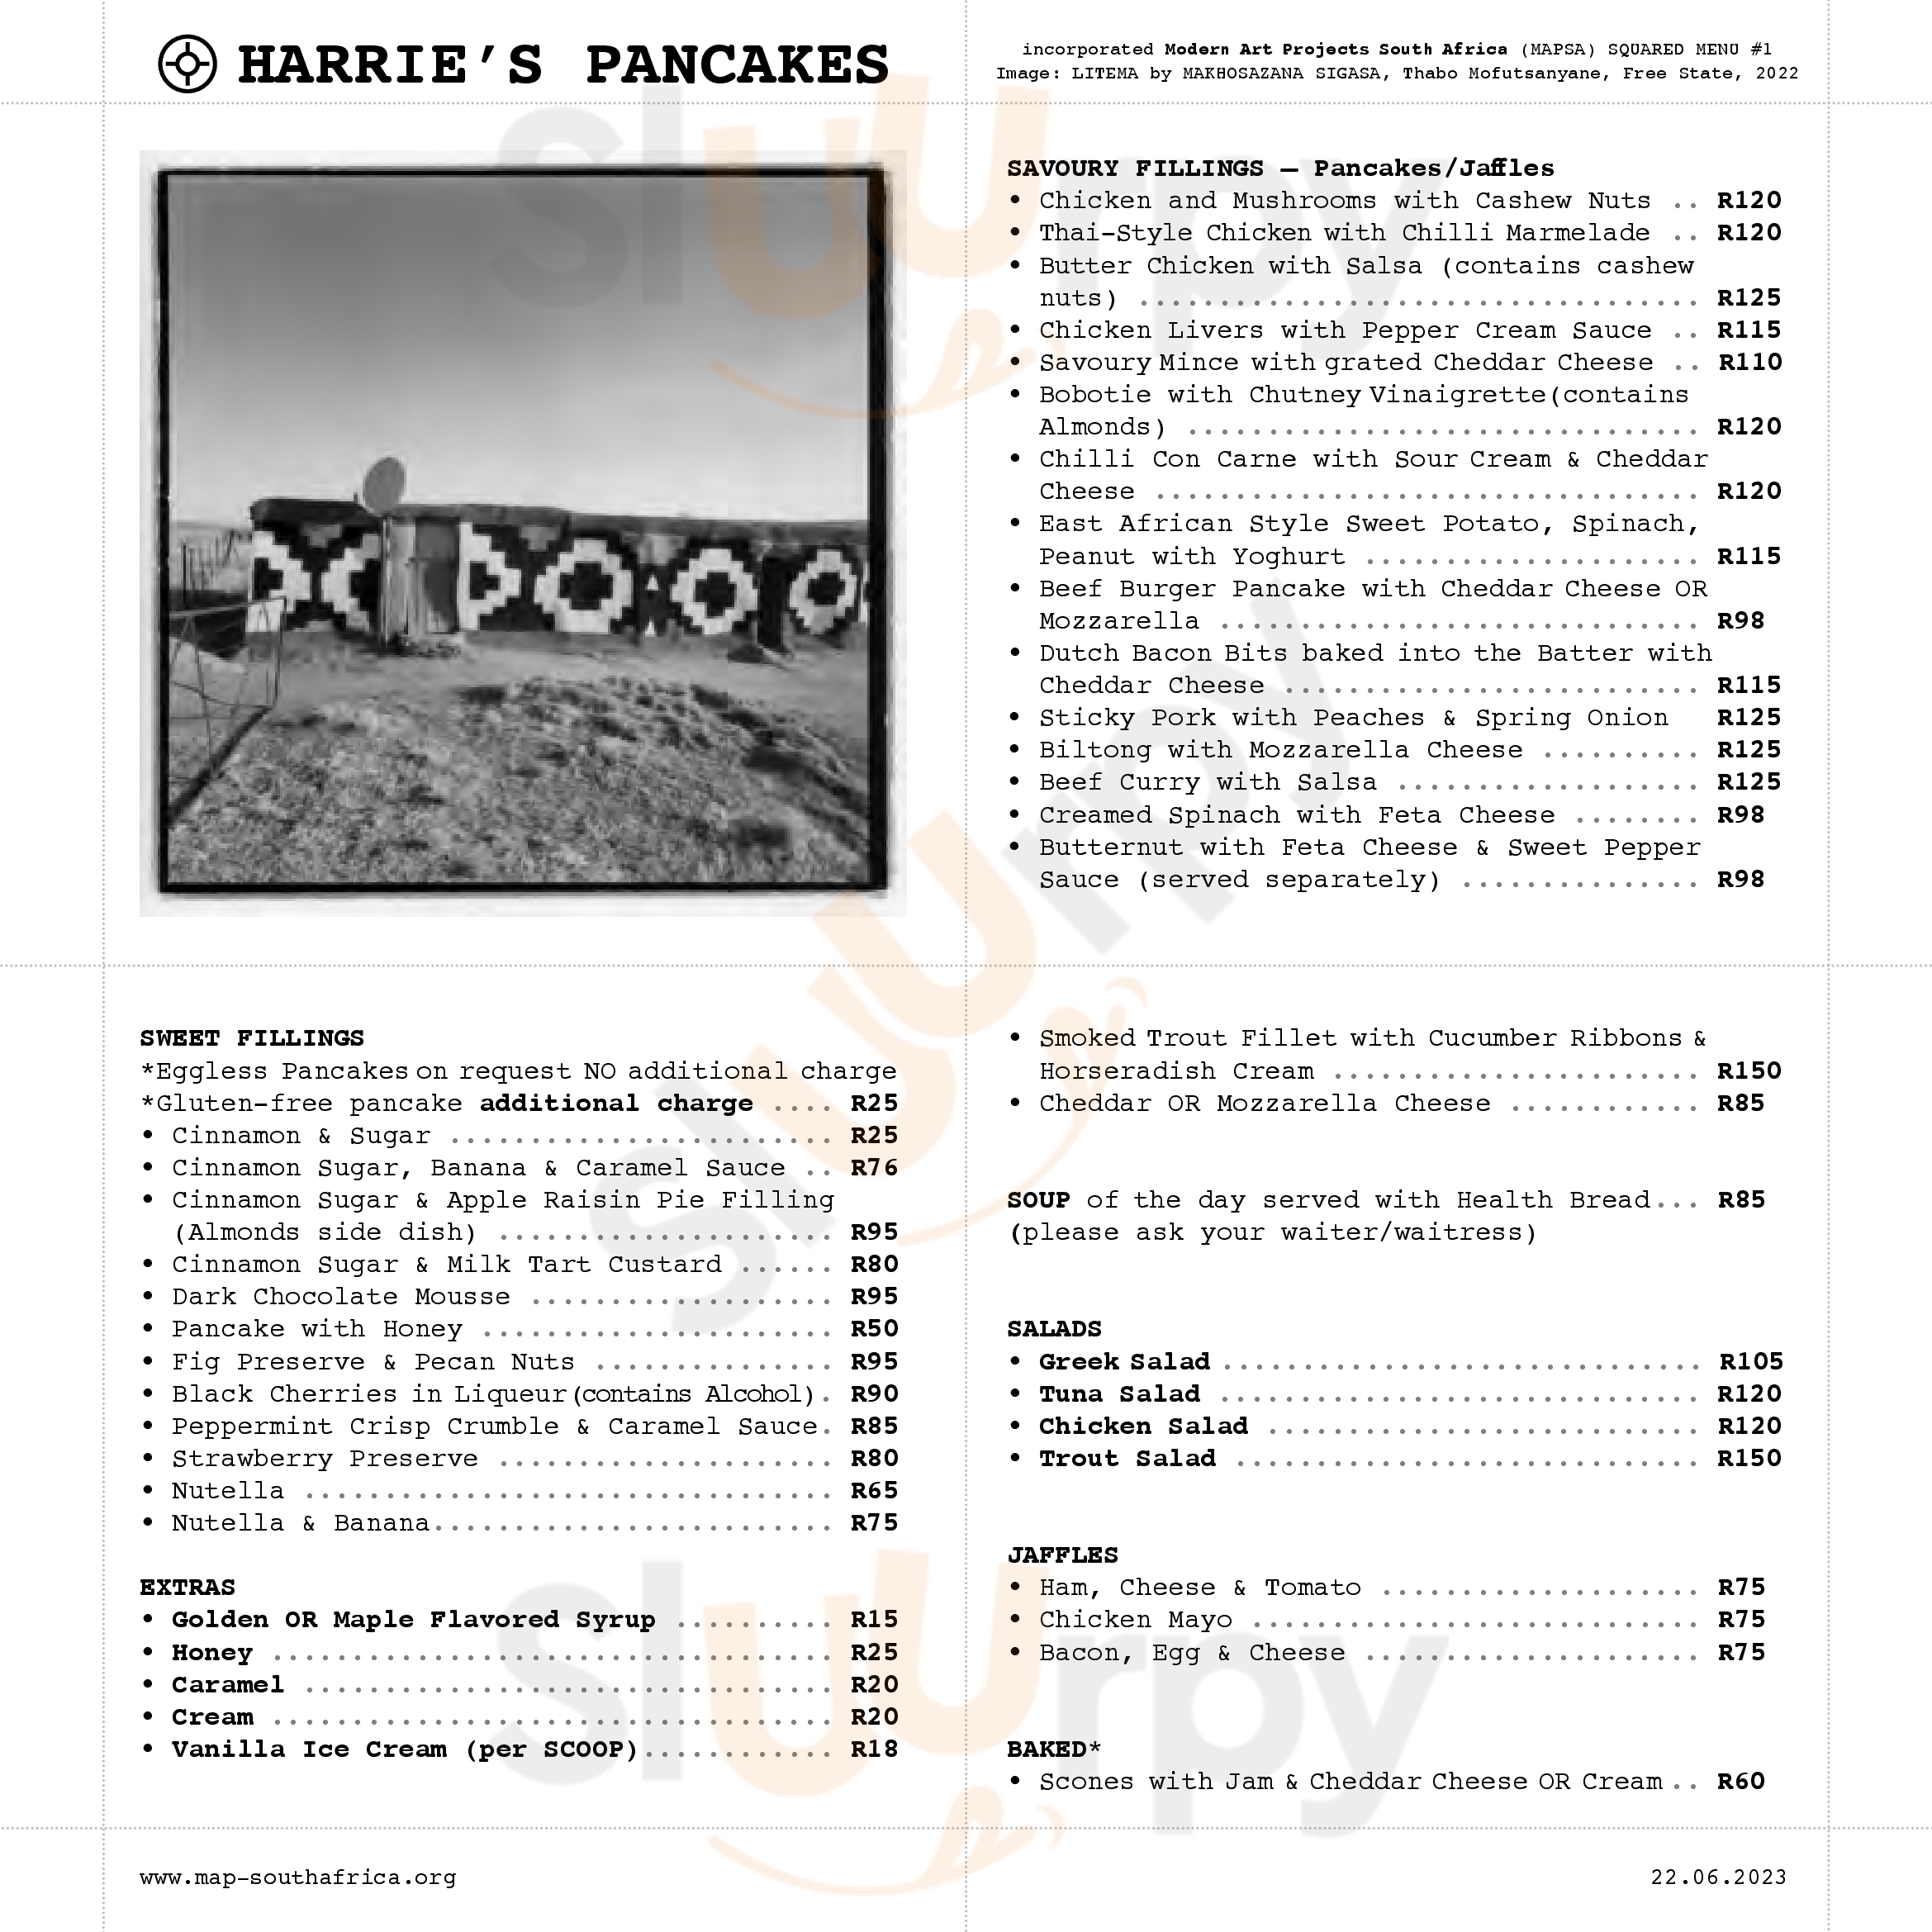 Harries Pancakes Pretoria Menu - 1